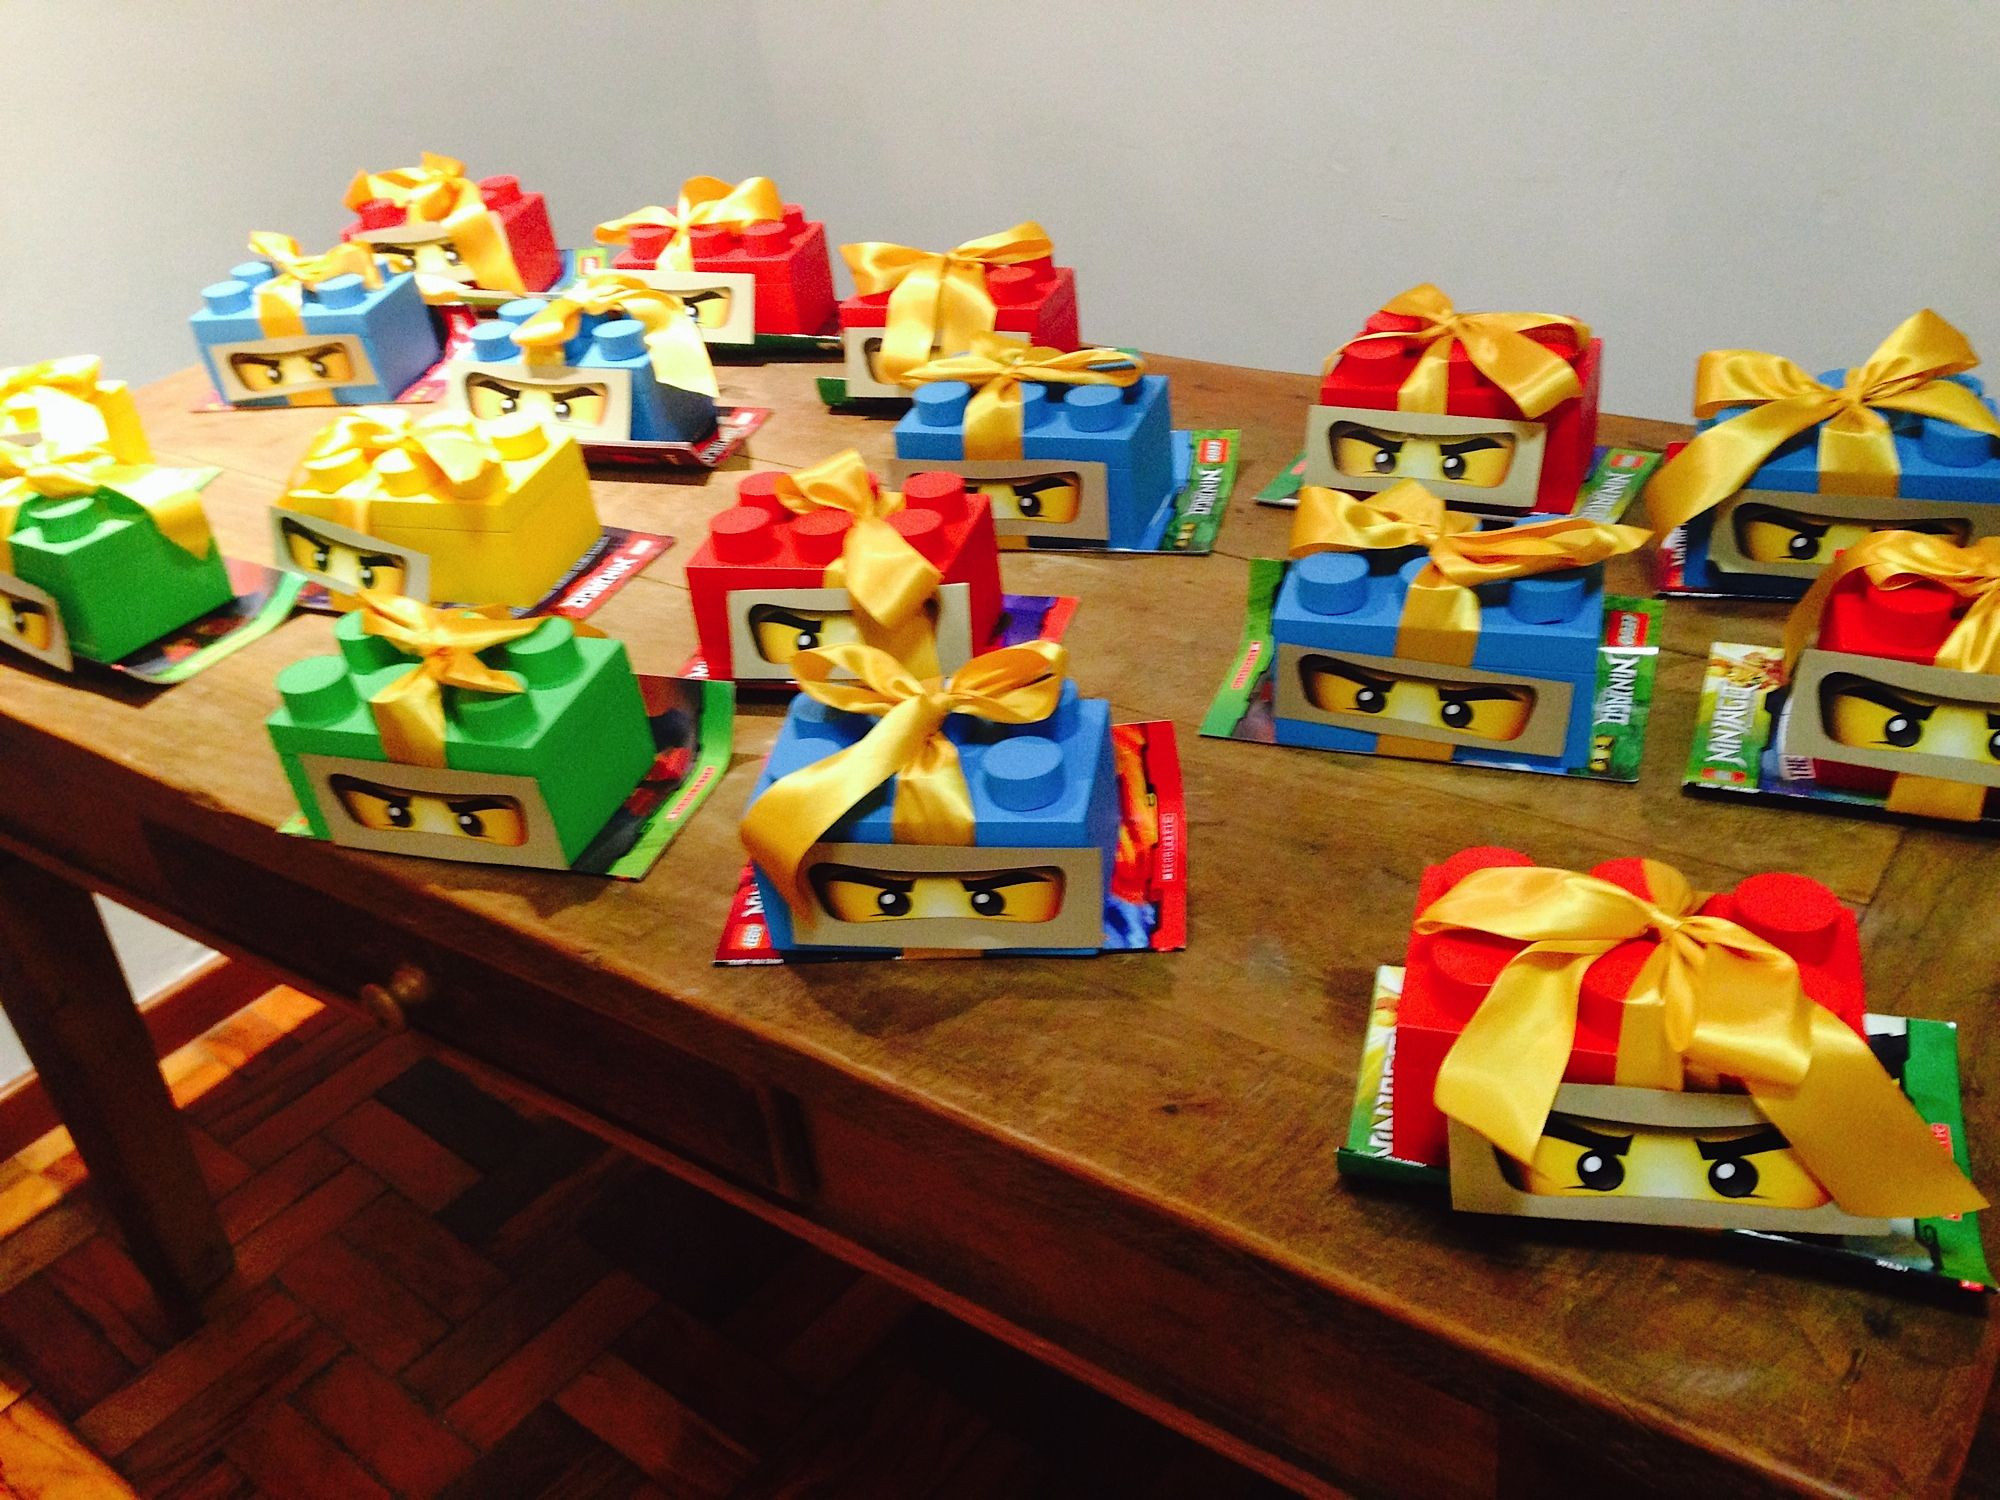 Best ideas about Lego Birthday Party Supplies
. Save or Pin Resultado de imagen para lego party ideas favors Now.